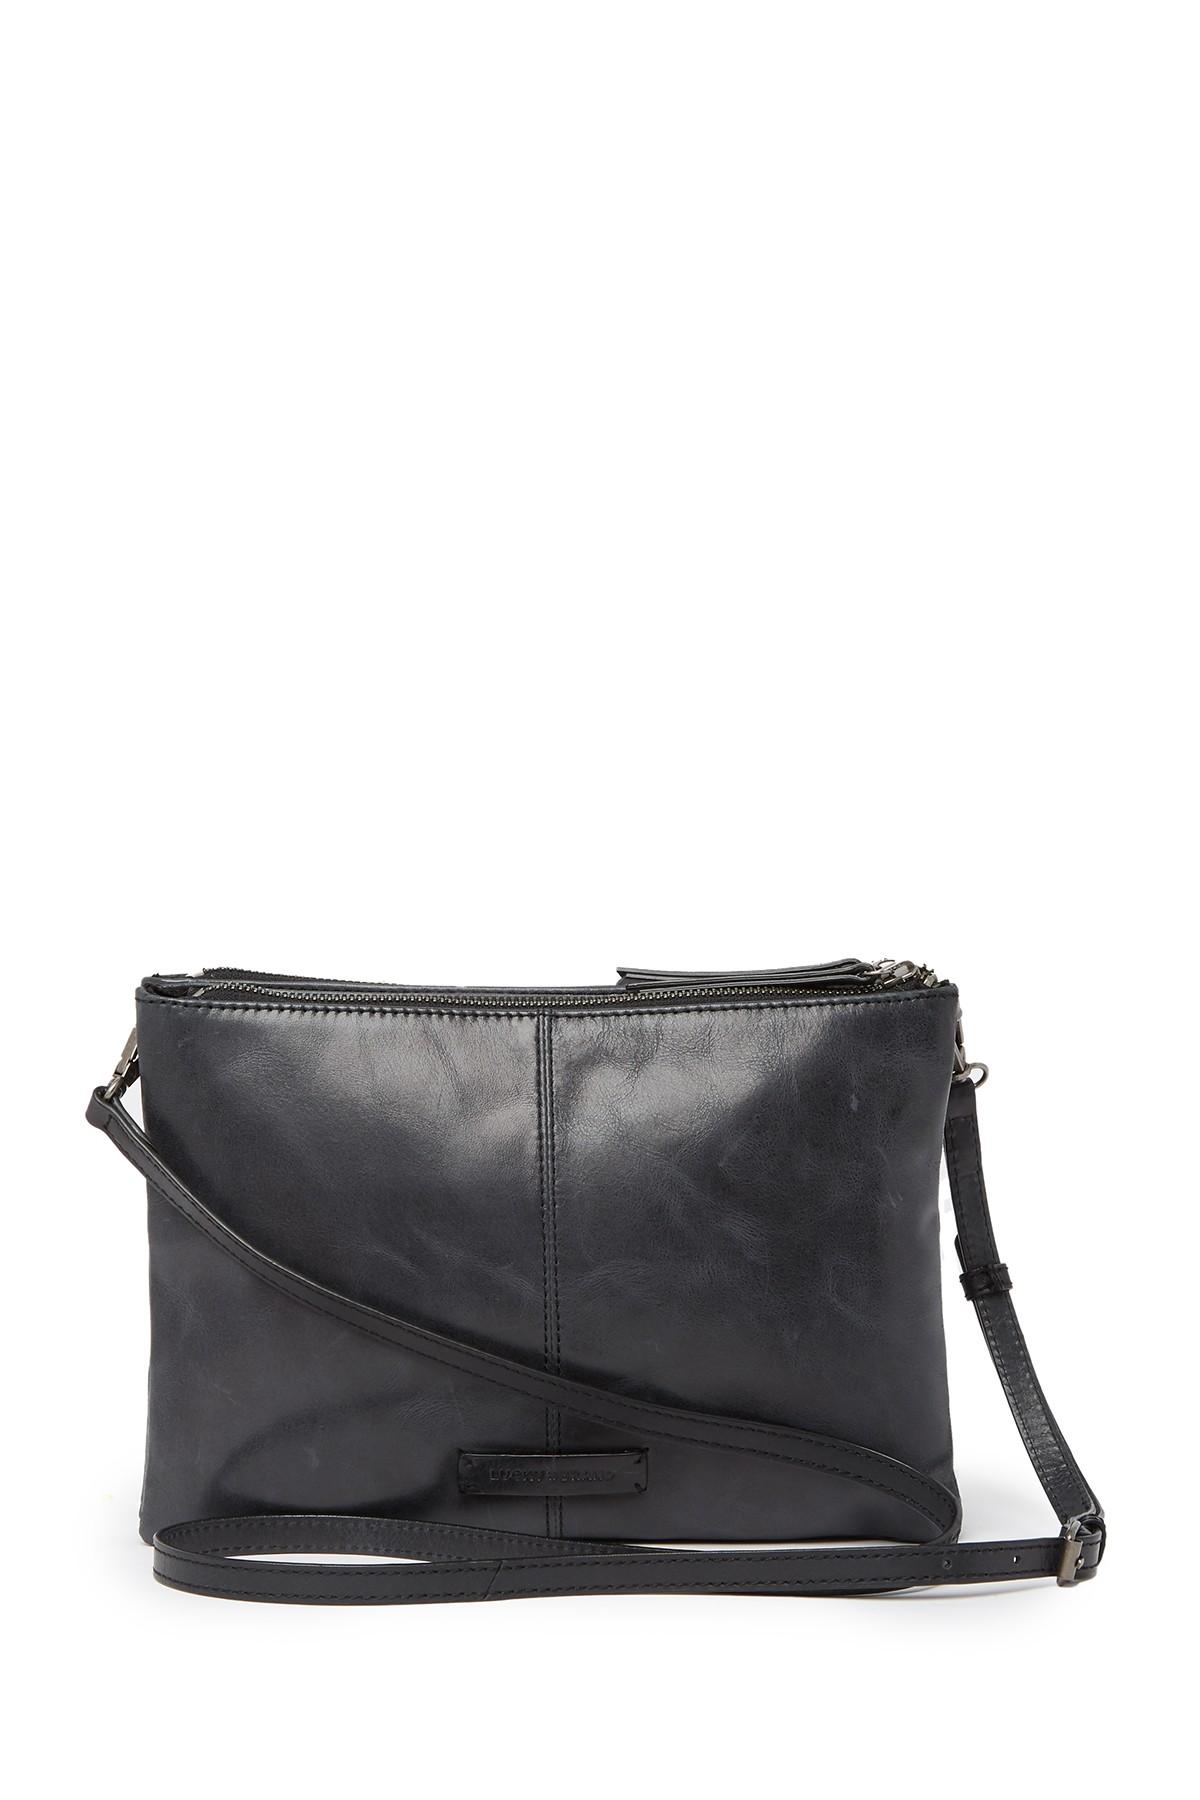 Lucky Brand Dori Leather Crossbody Bag in Black - Lyst